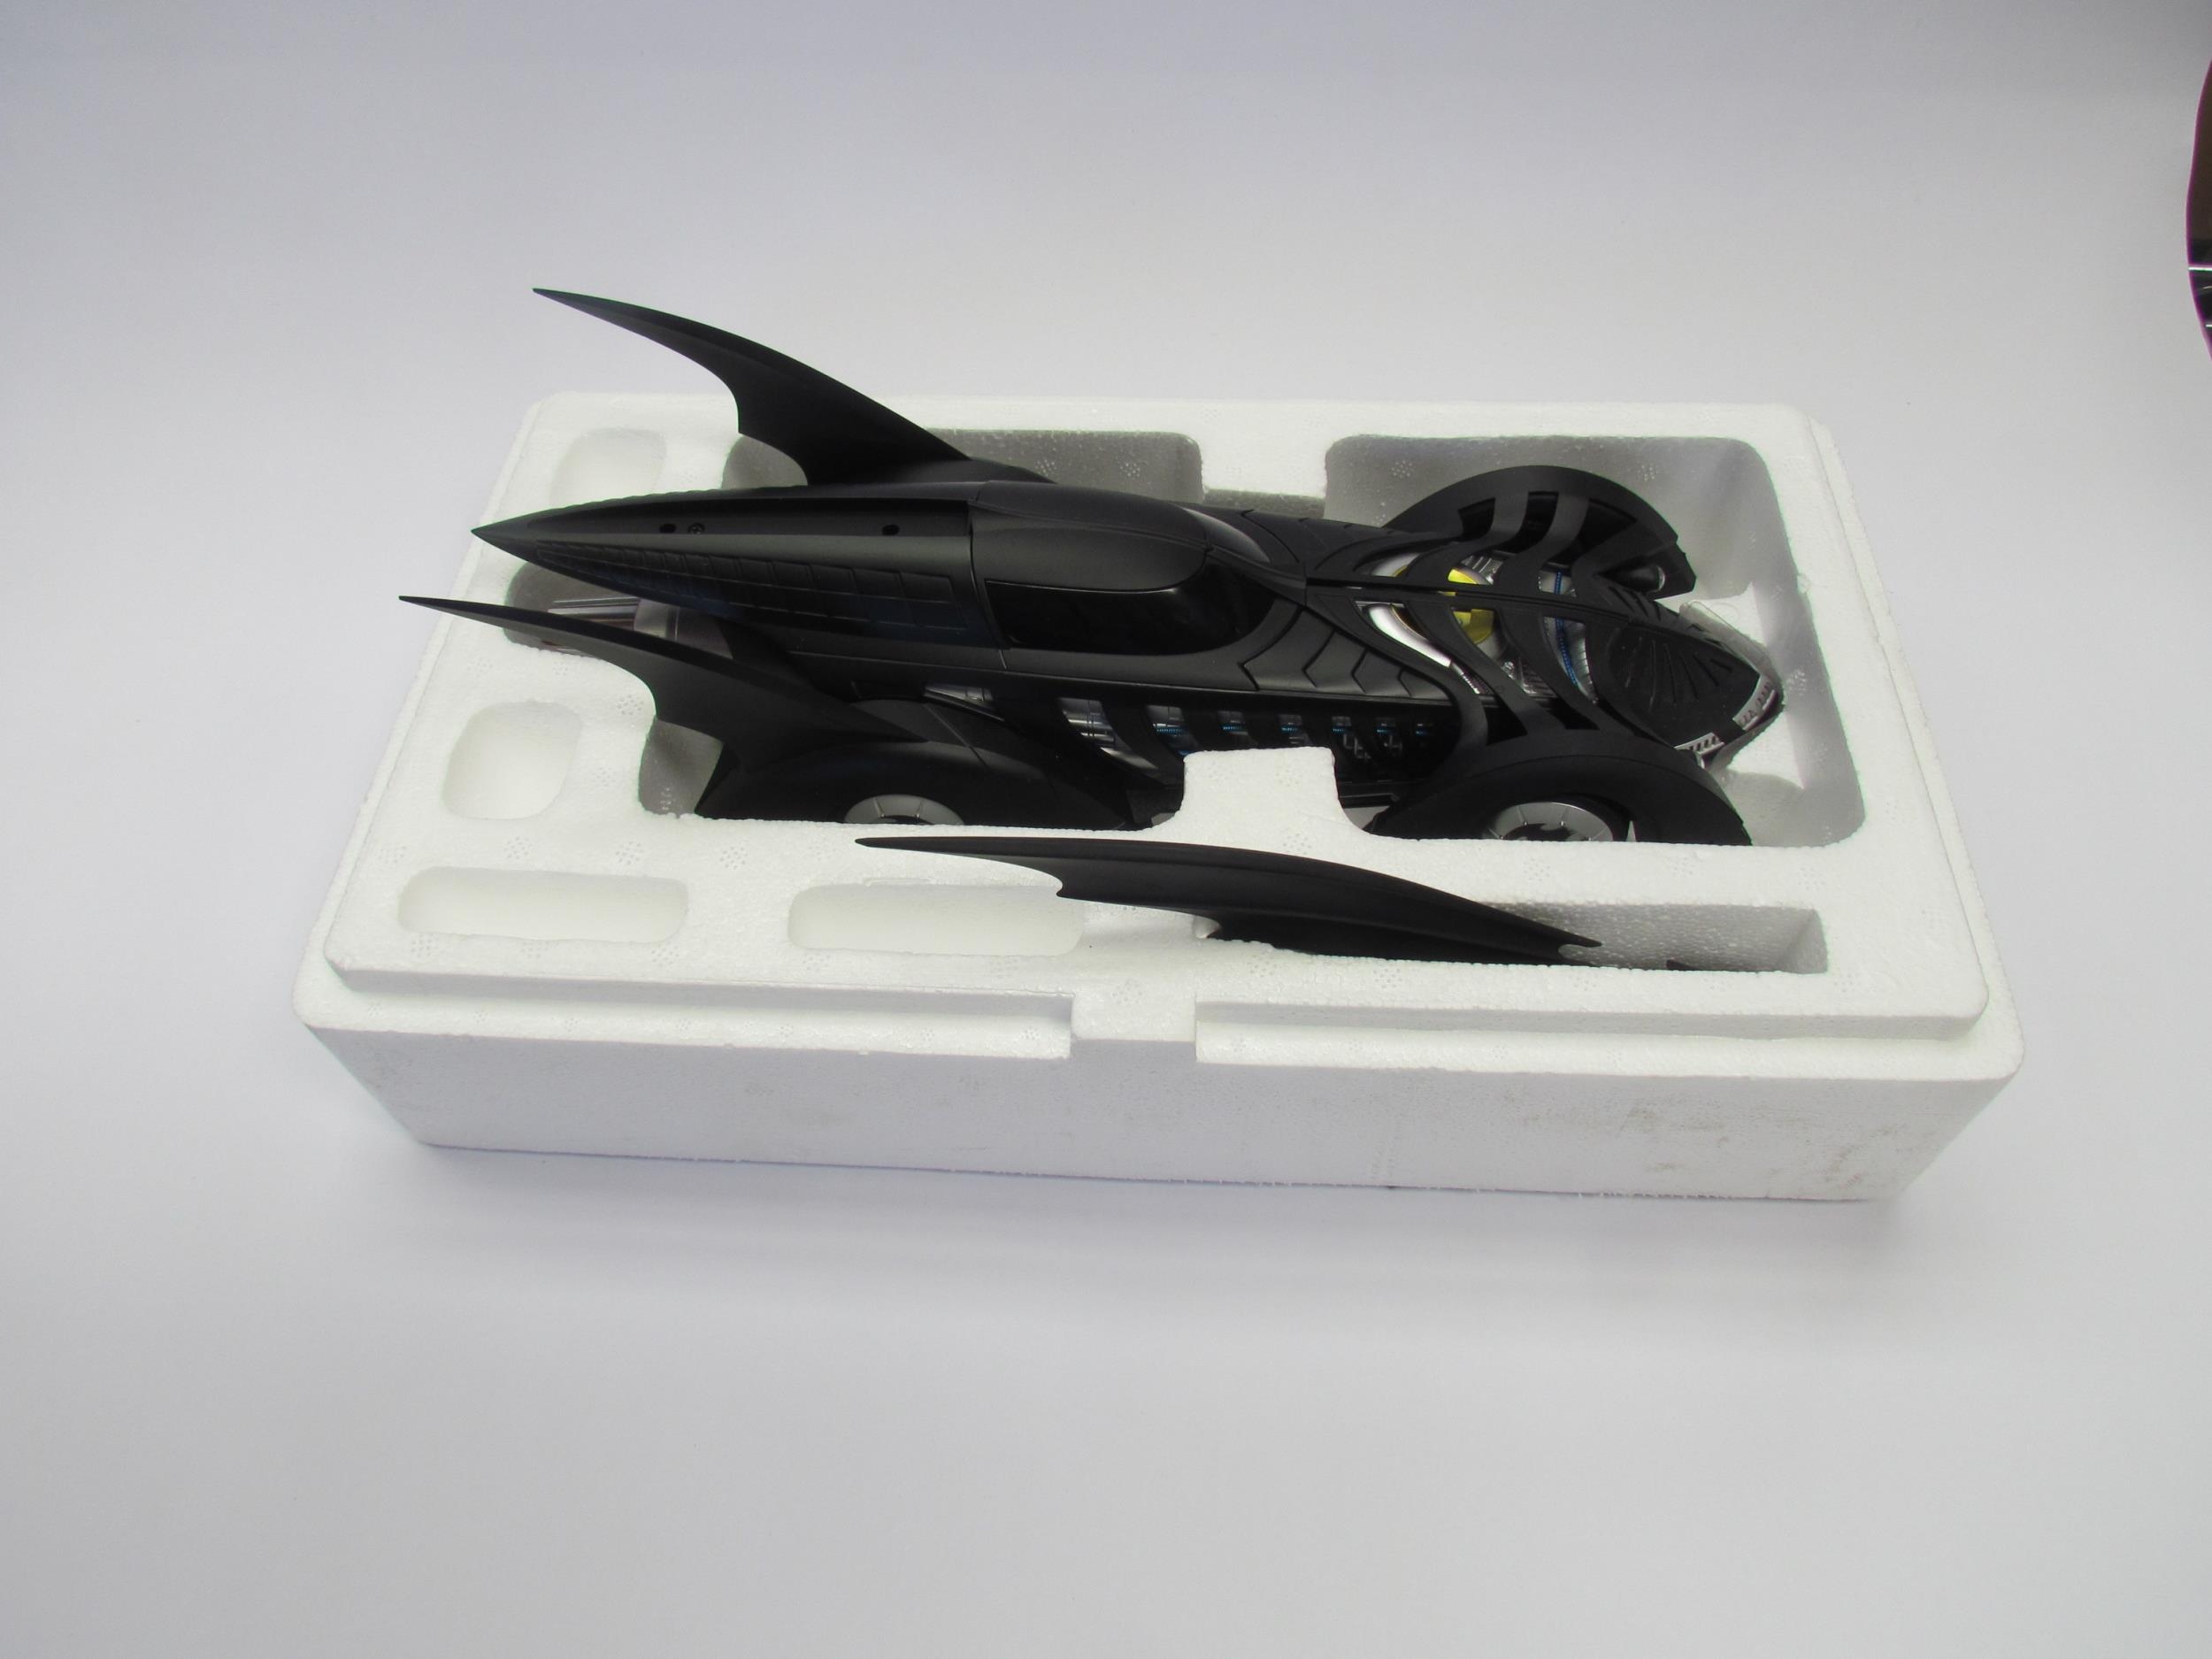 A boxed Hot Wheels 1:18 scale Batman Forever Batmobile